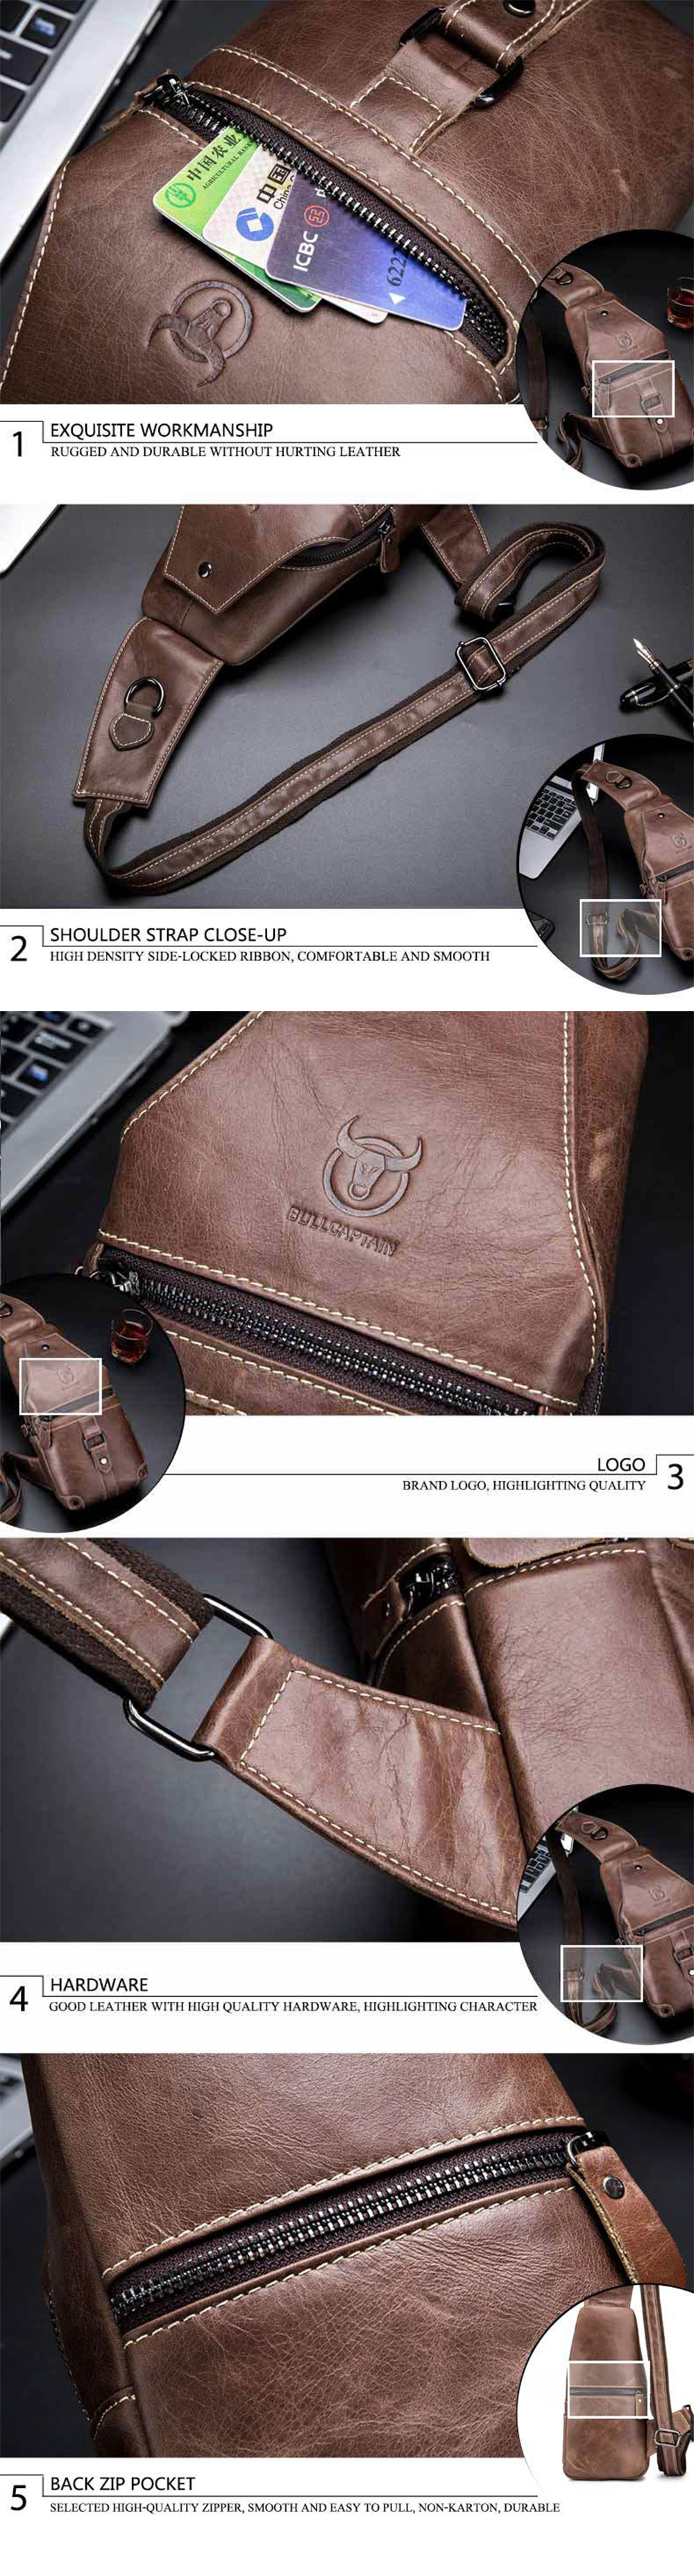 Bullcaptain-Genuine-Leather-Casual-Chest-Bag-Shoulder-Crossbody-Bag-1453201